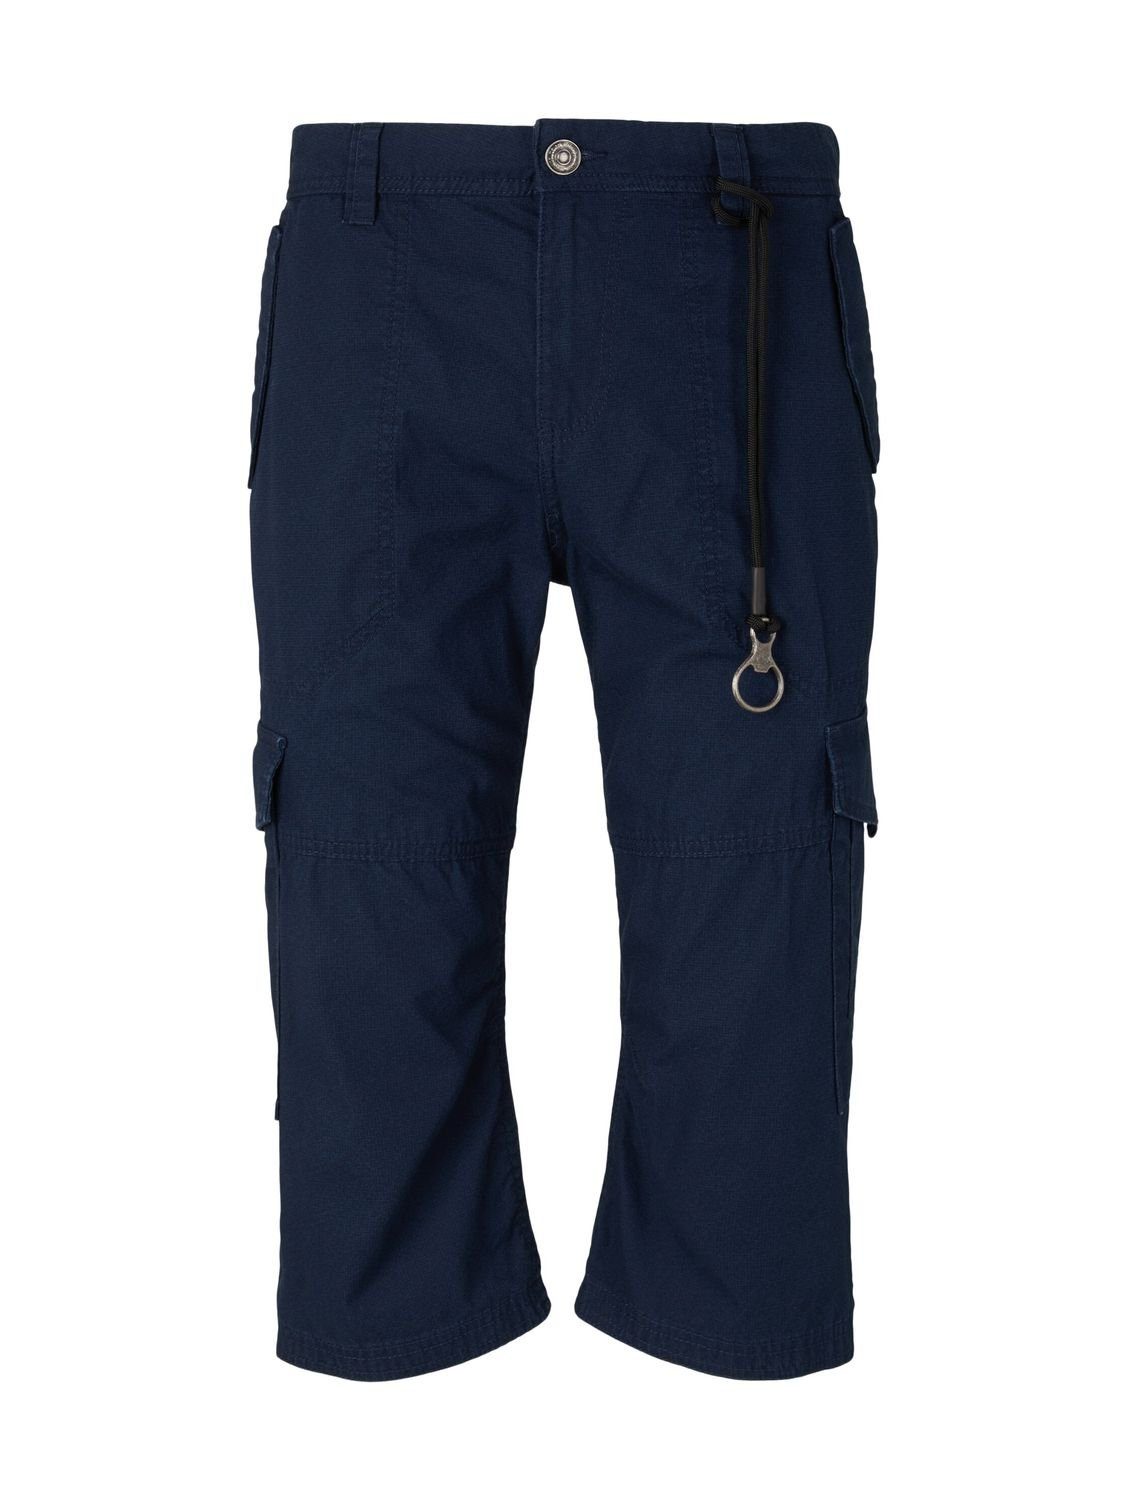 OVERKNEE TAILOR Navy Design MAX aus Minimal Shorts TOM 29122 Baumwolle